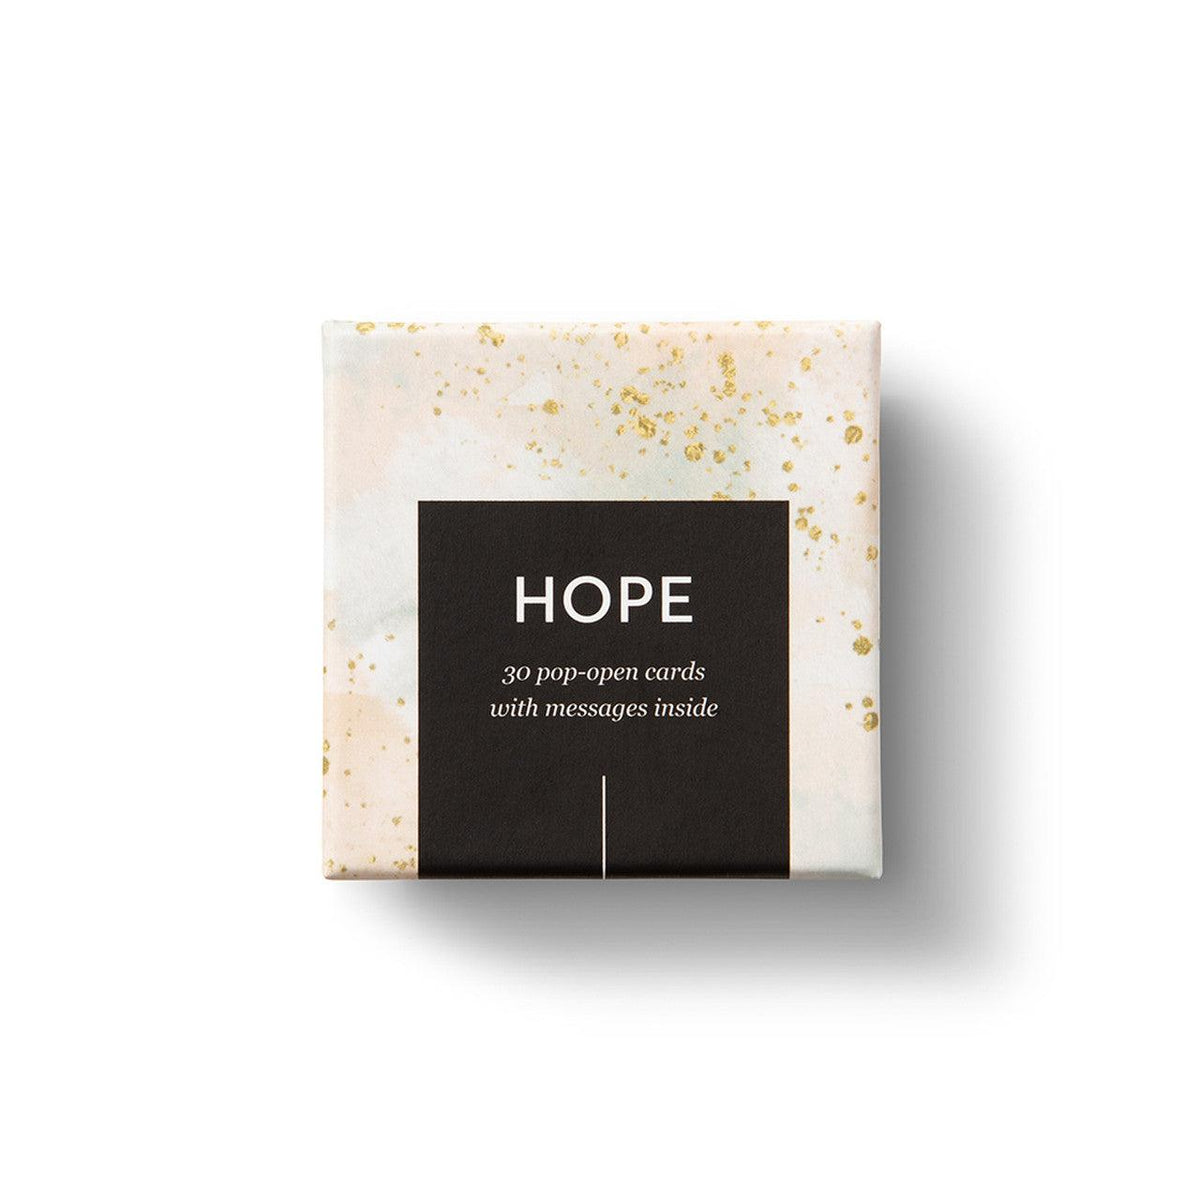 hope cards 1.jpg